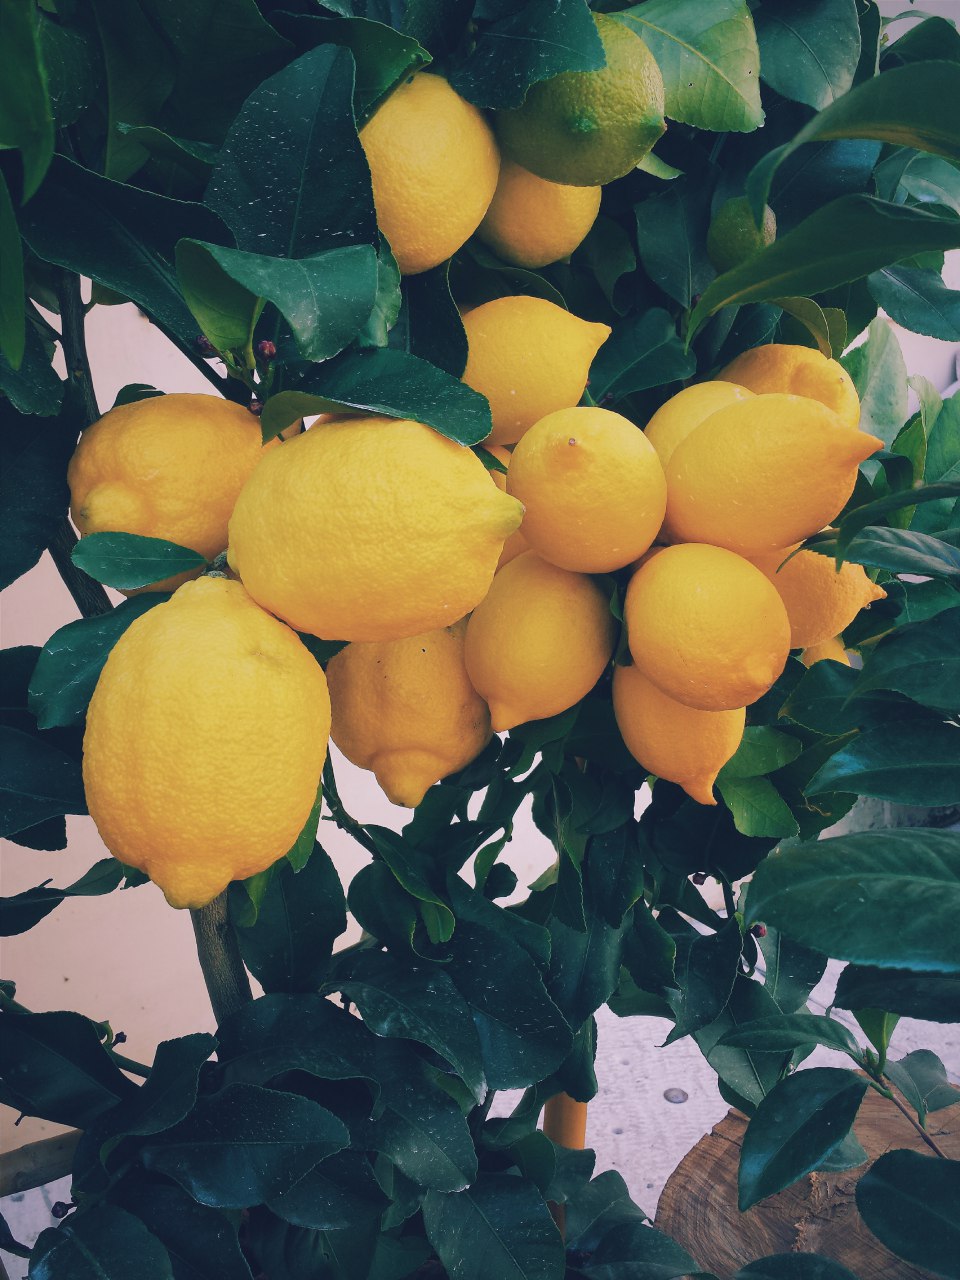 lemon| vegetables| fruit| yellow|sour fruit| yoga diet